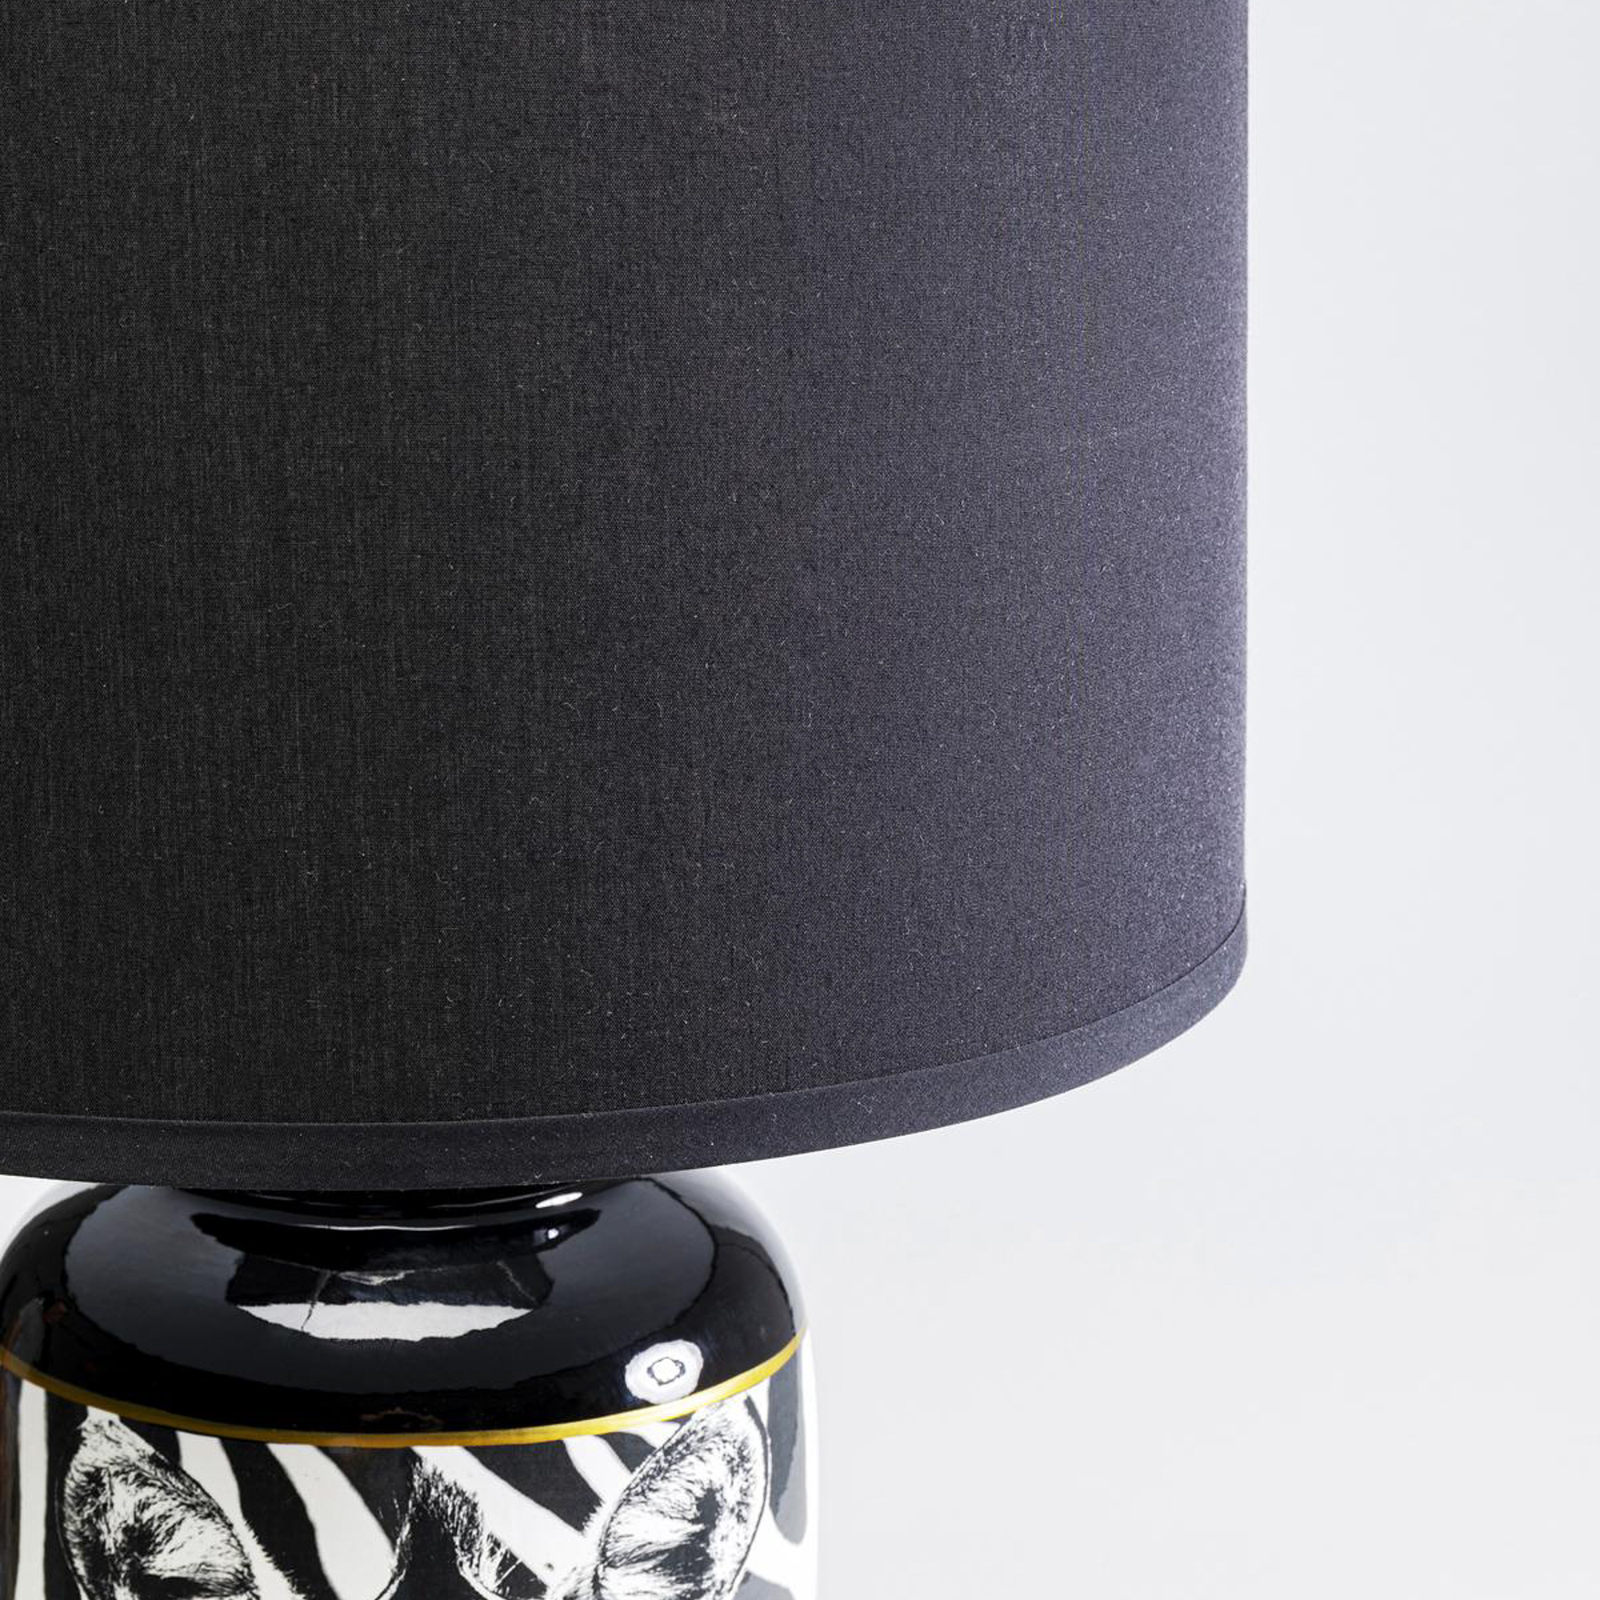 KARE bordslampa Zebra Face svart textil, porslin, 71 cm